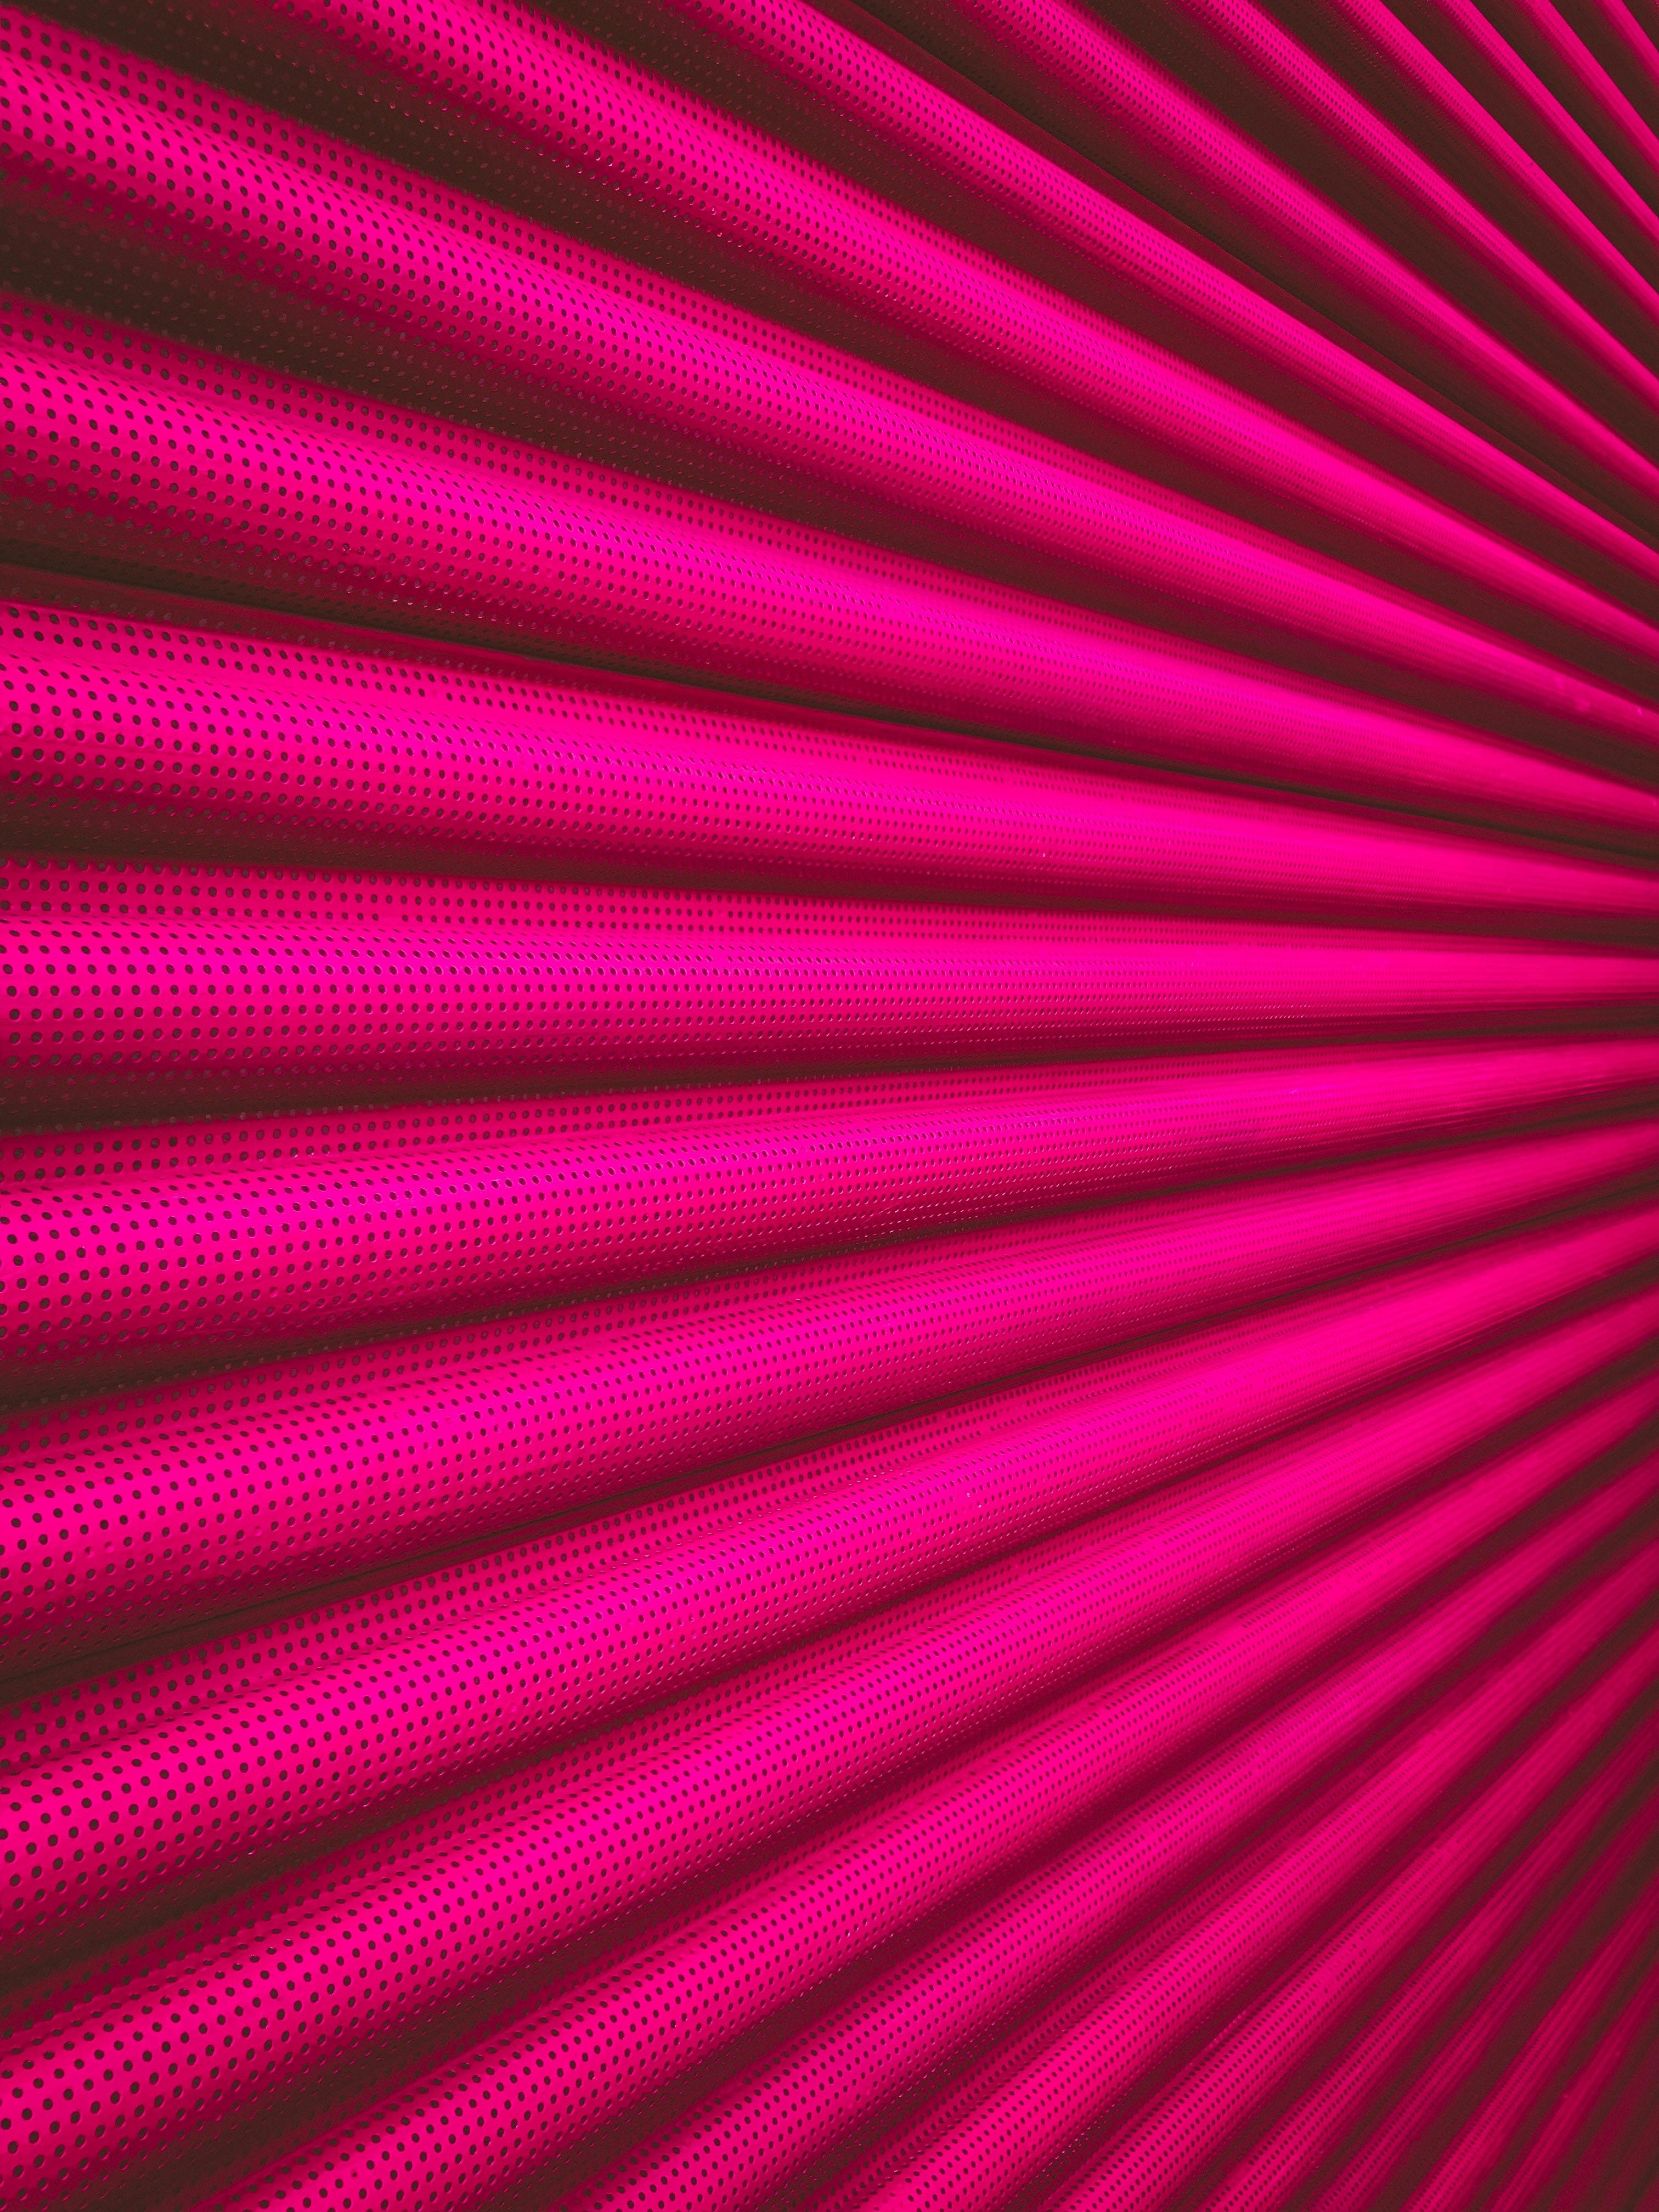 neon colors wallpaper pink